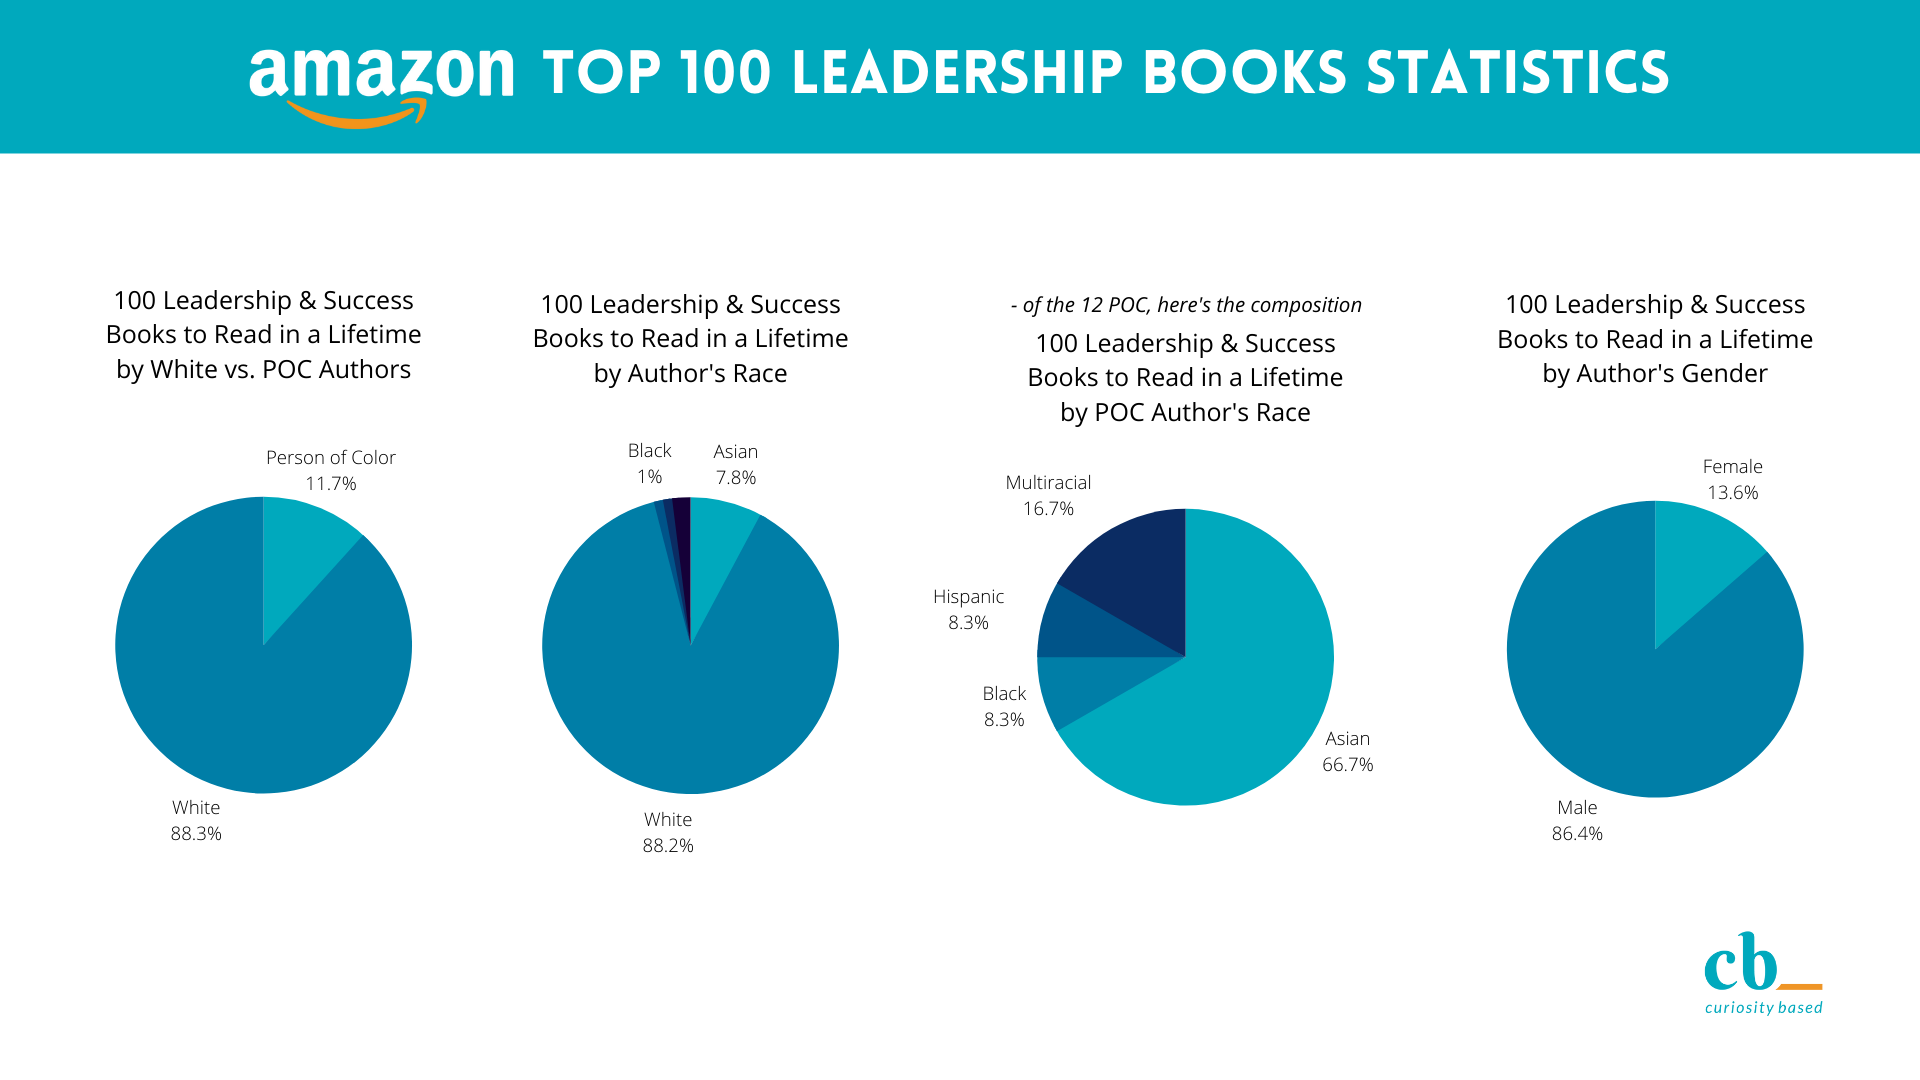 Amazon Top 100 Leadership Books Statistics